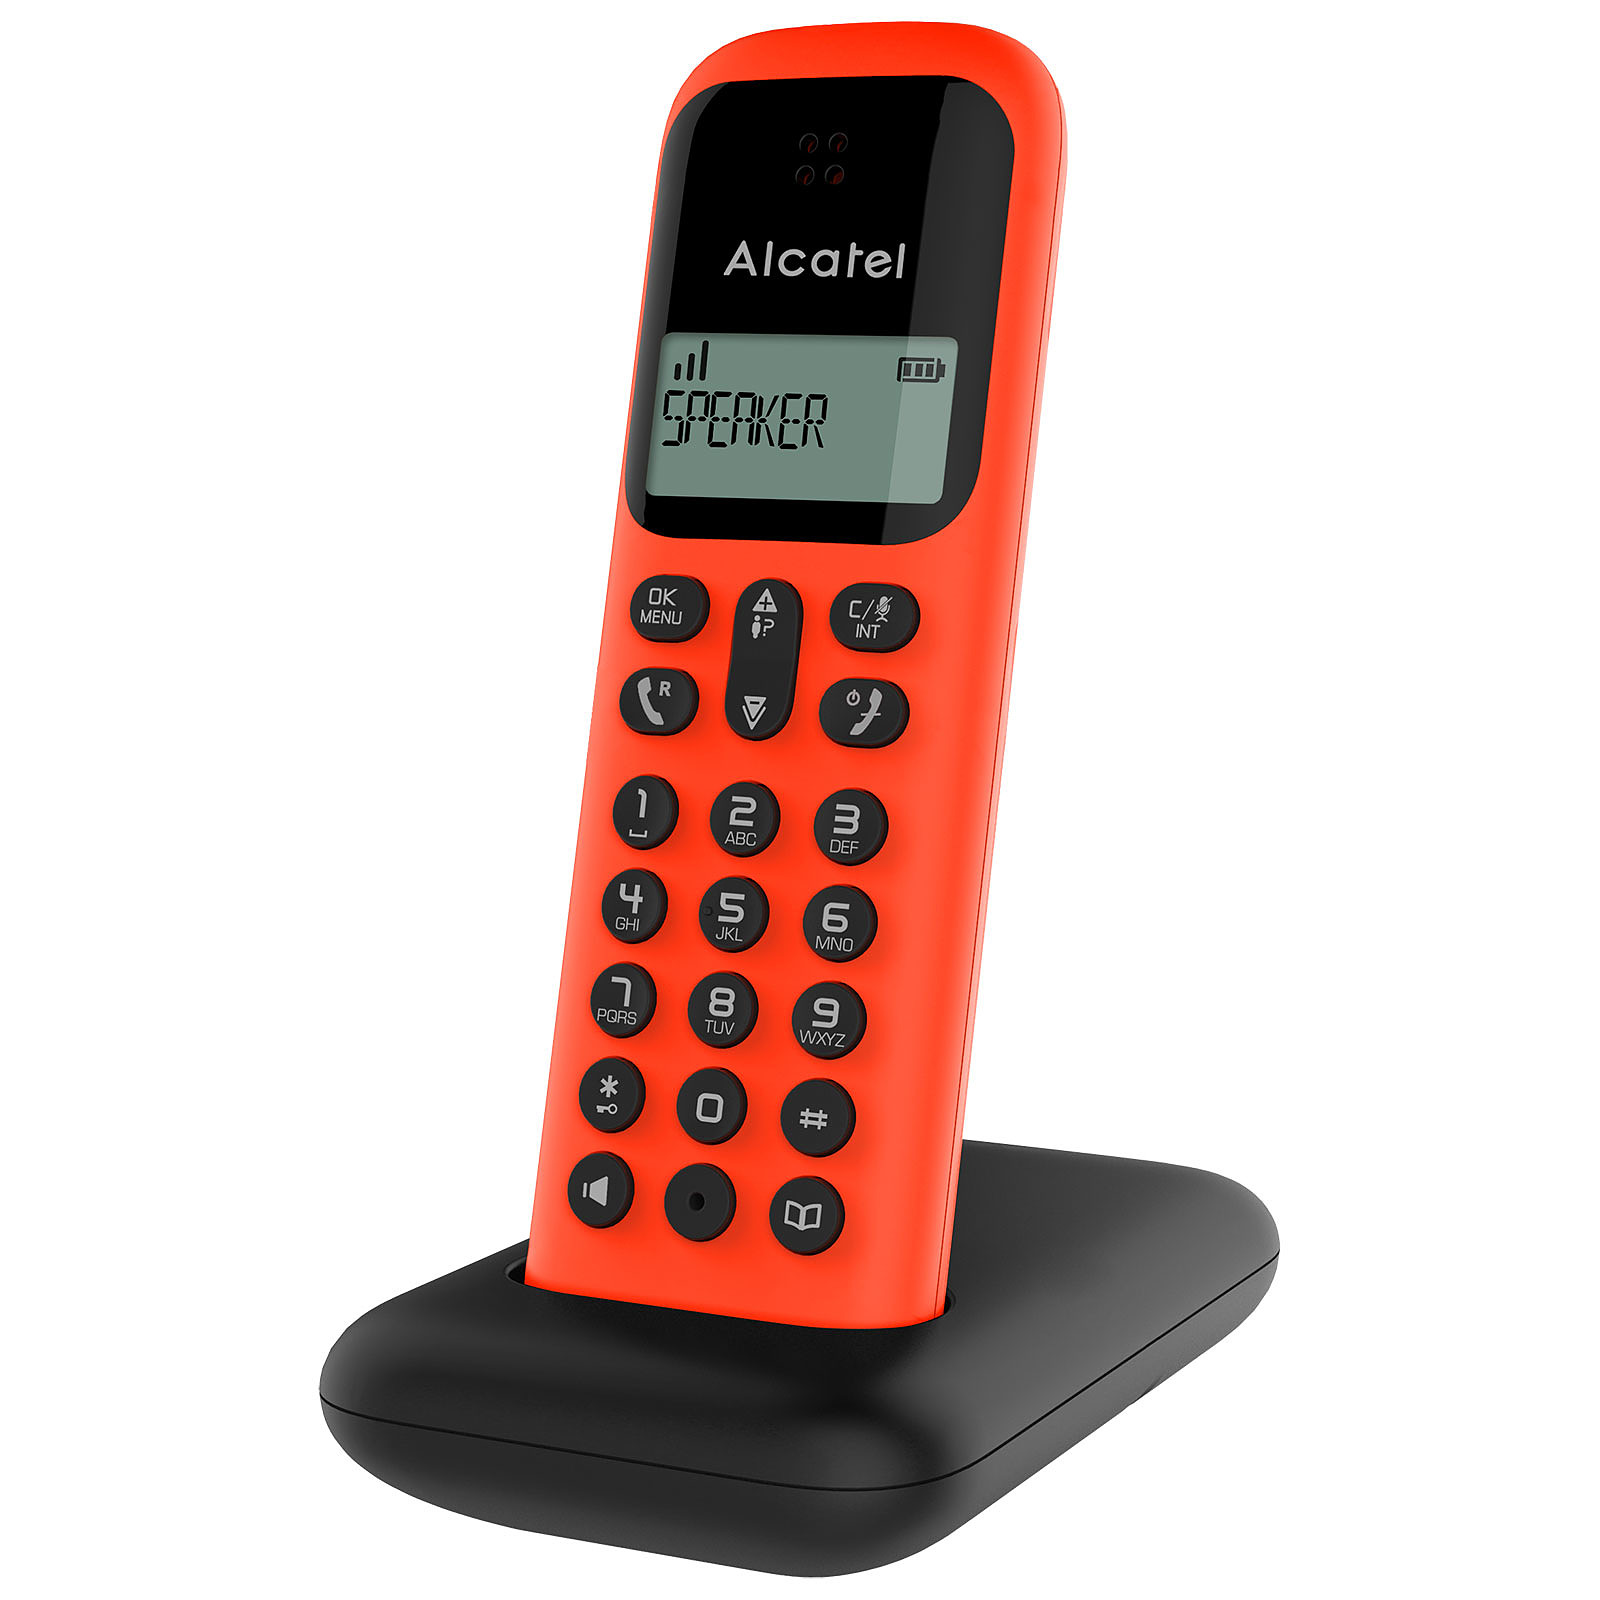 Alcatel D285 Rouge · Occasion - Telephone sans fil Alcatel - Occasion